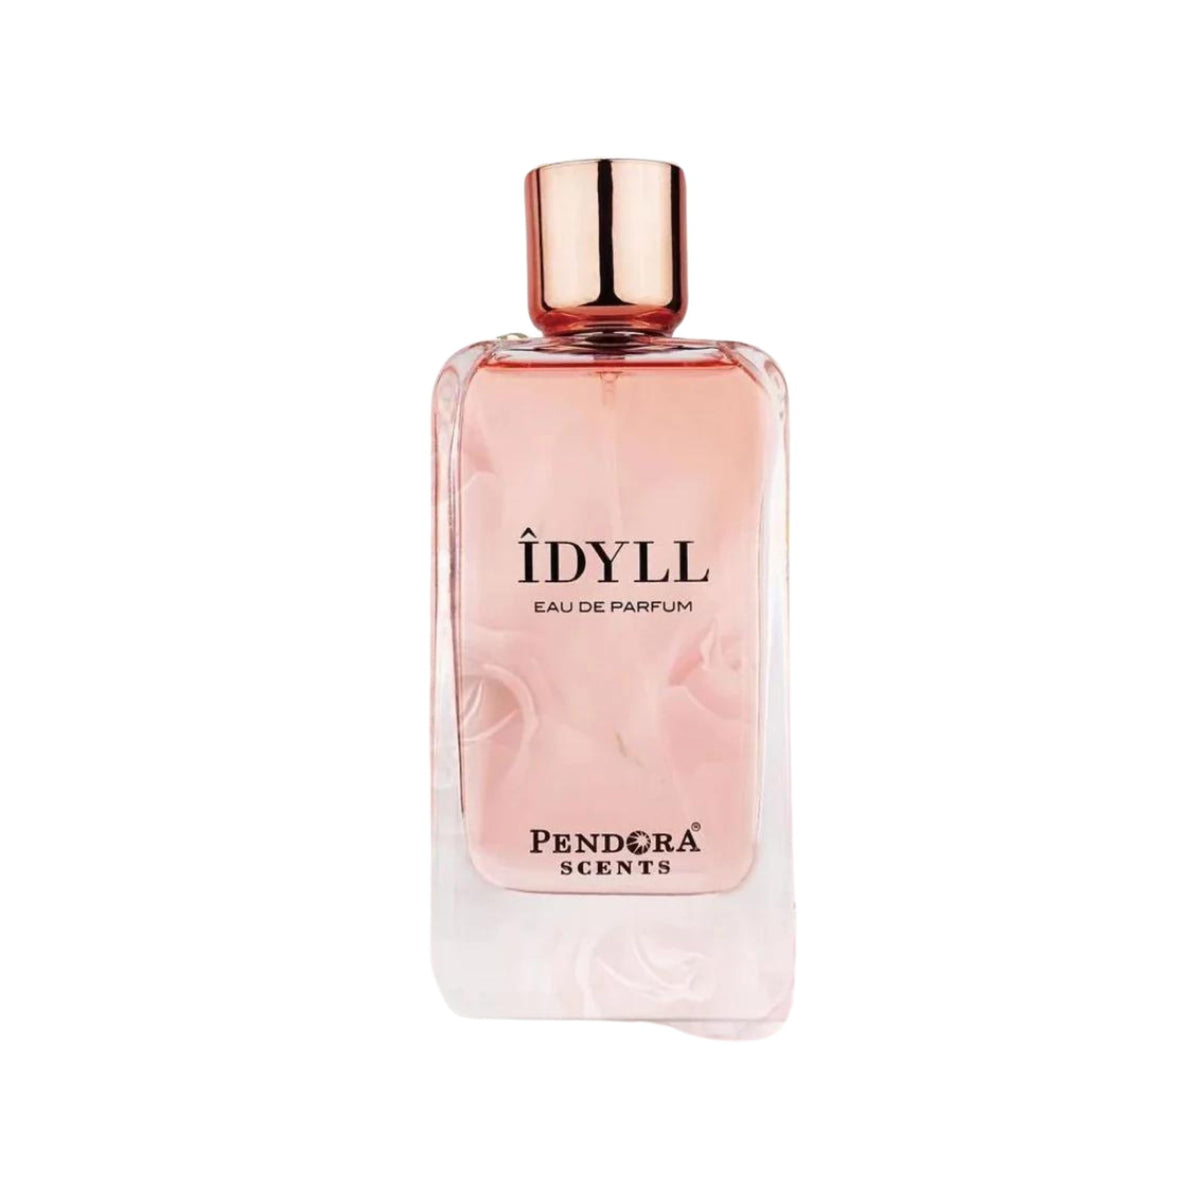 Idyll Eau De Parfum Pendora Scents Long Lasting Perfume 100ml for Women